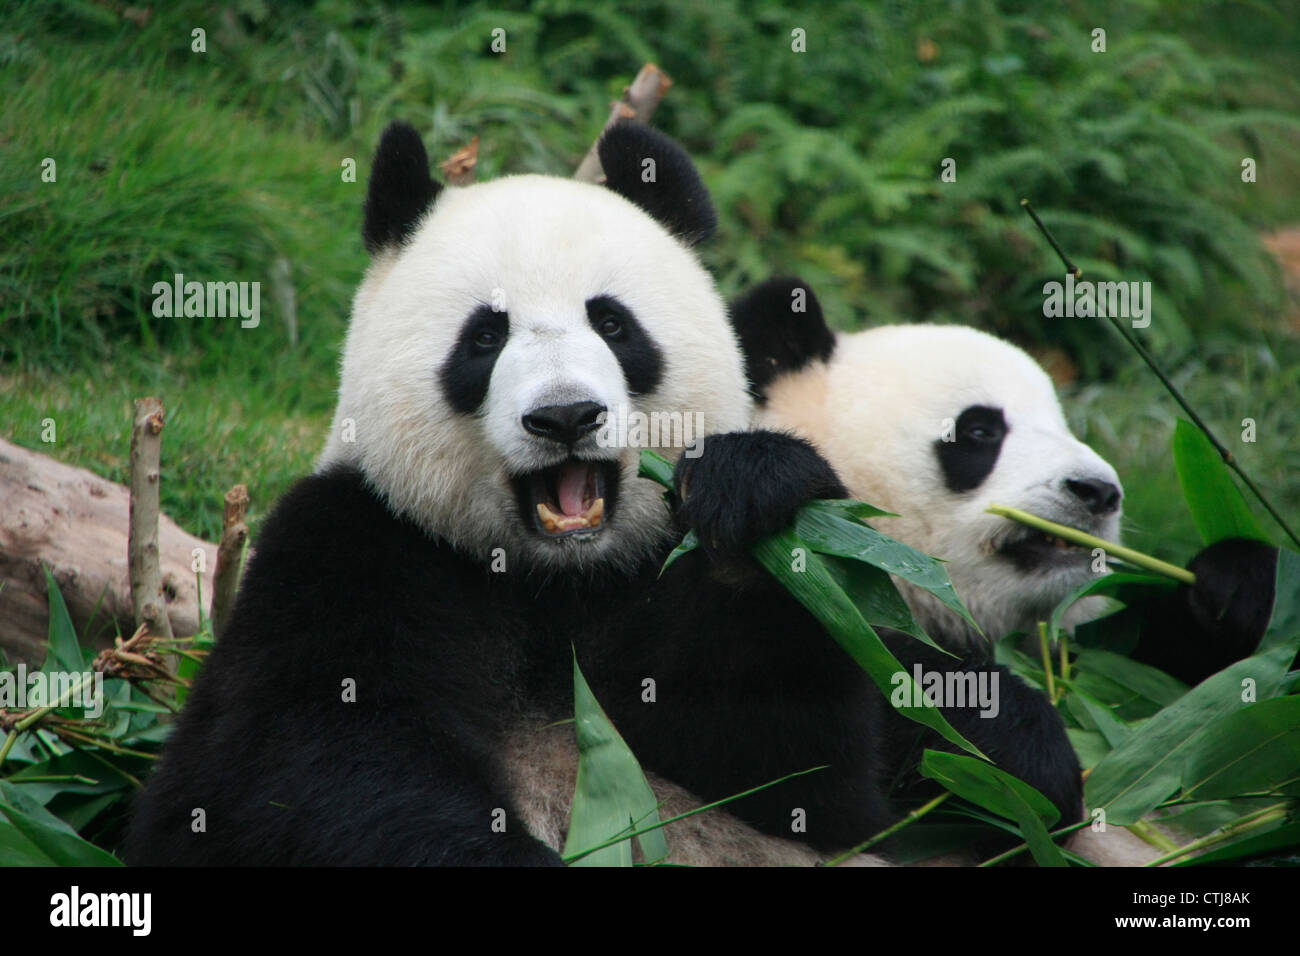 Giant panda bears eating bamboo (Ailuropoda Melanoleuca), China Stock Photo